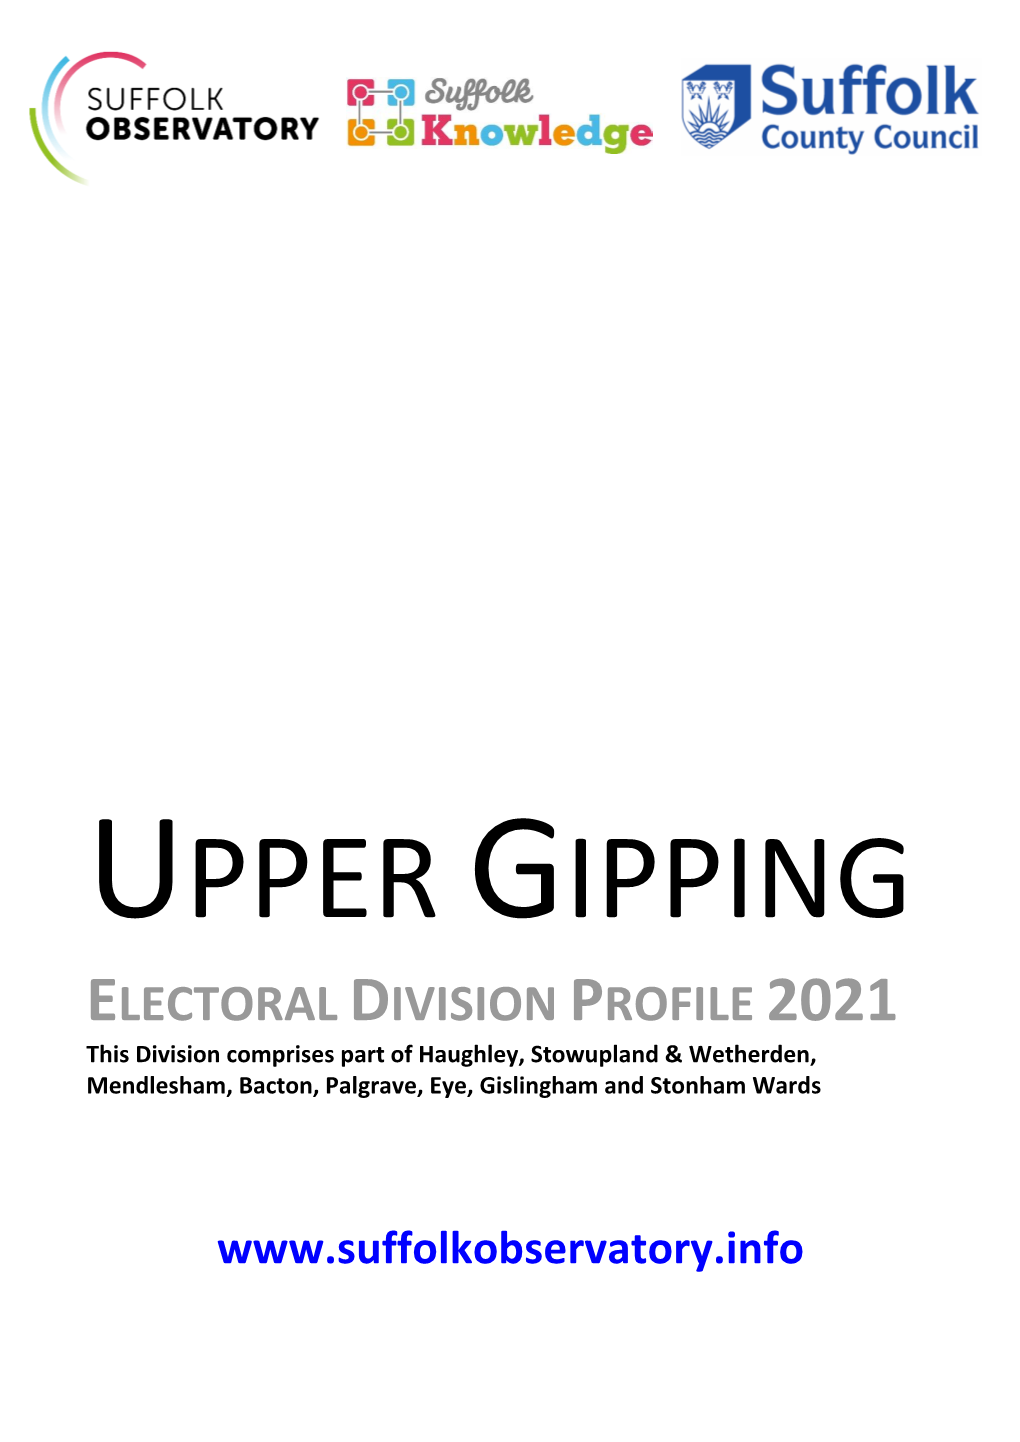 35 Upper Gipping